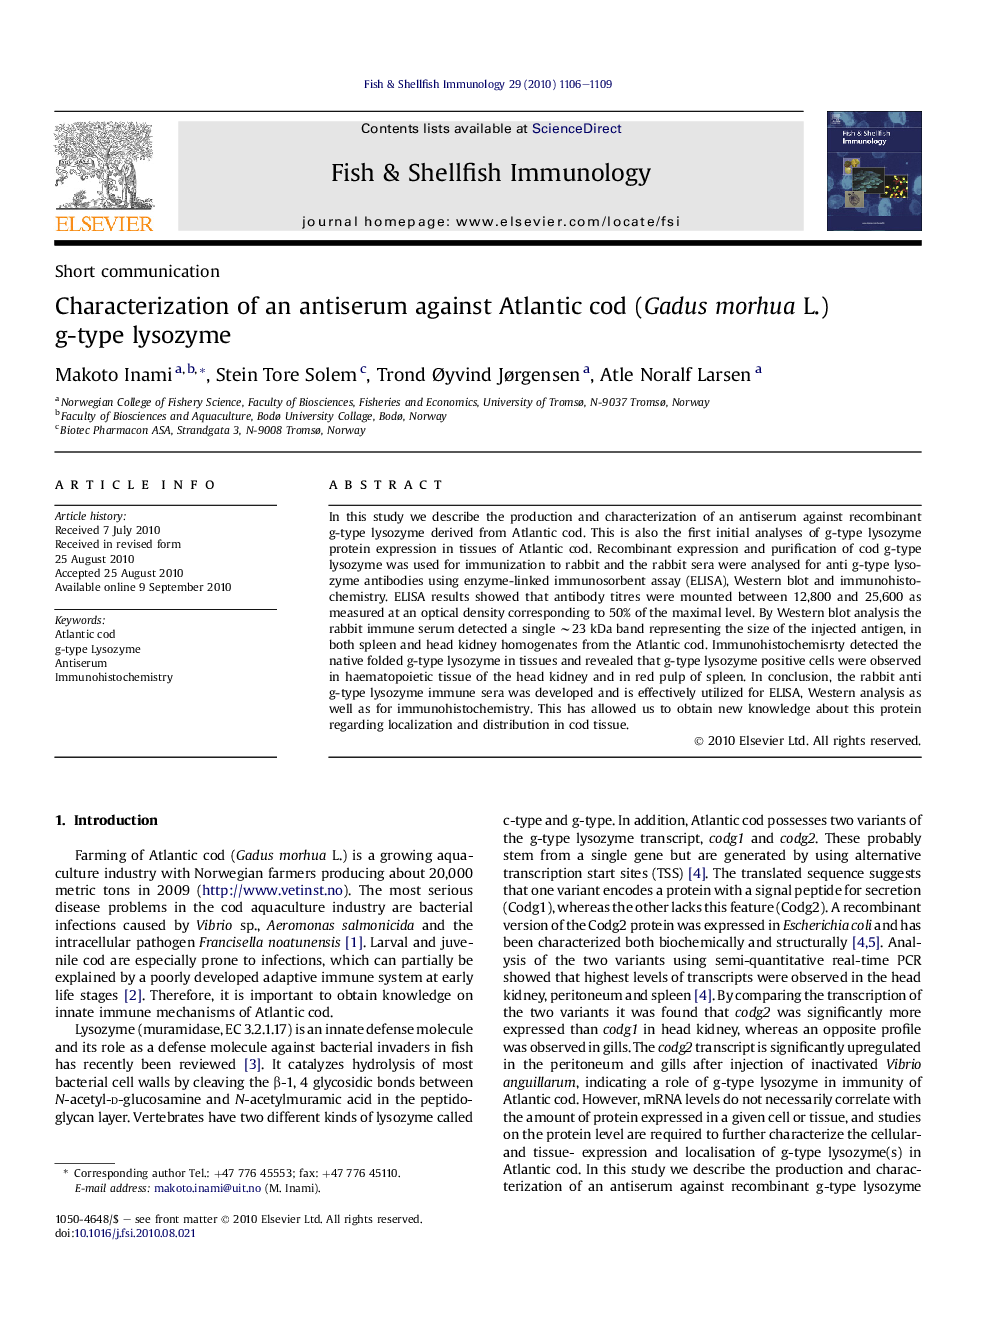 Characterization of an antiserum against Atlantic cod (Gadus morhua L.) g-type lysozyme